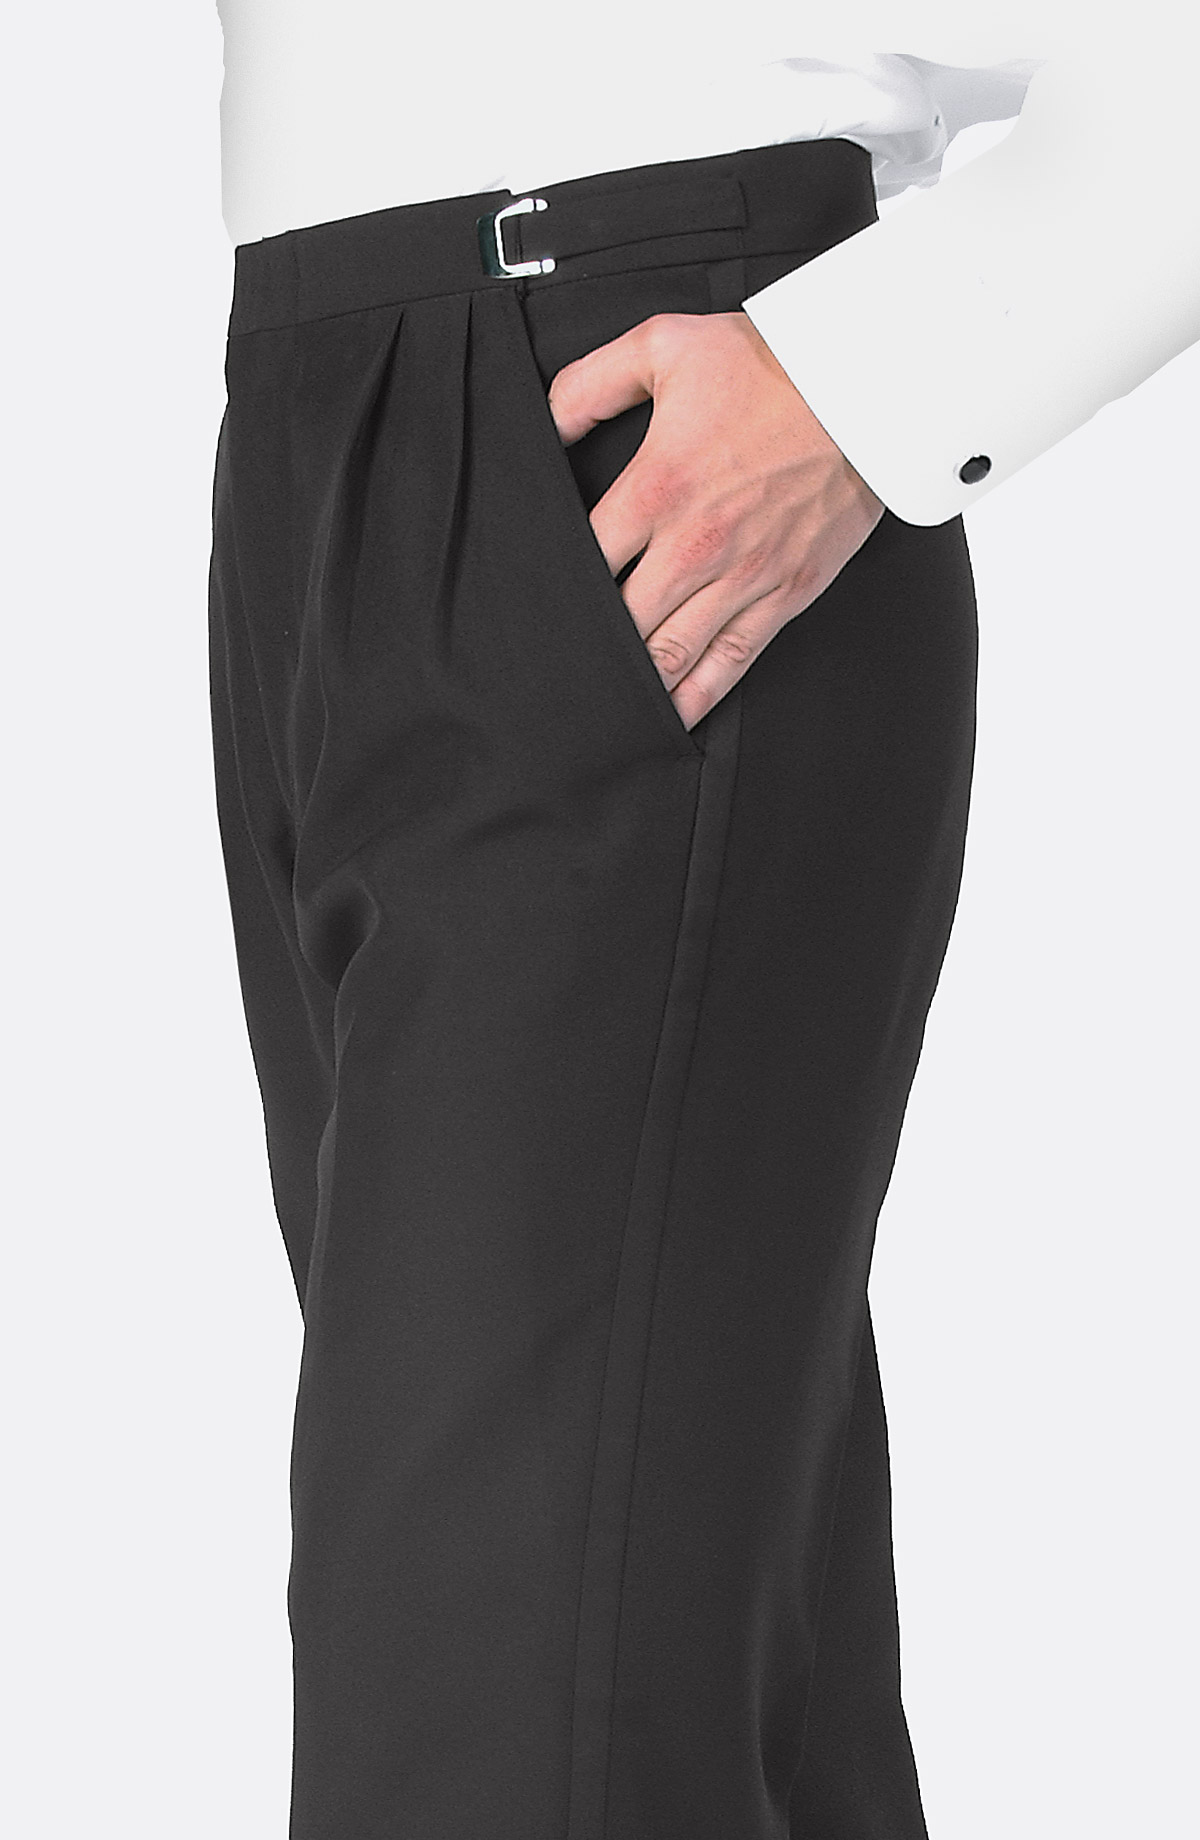 Rental Buckle Adjustable Pleated Tuxedo Pants - Rental Program